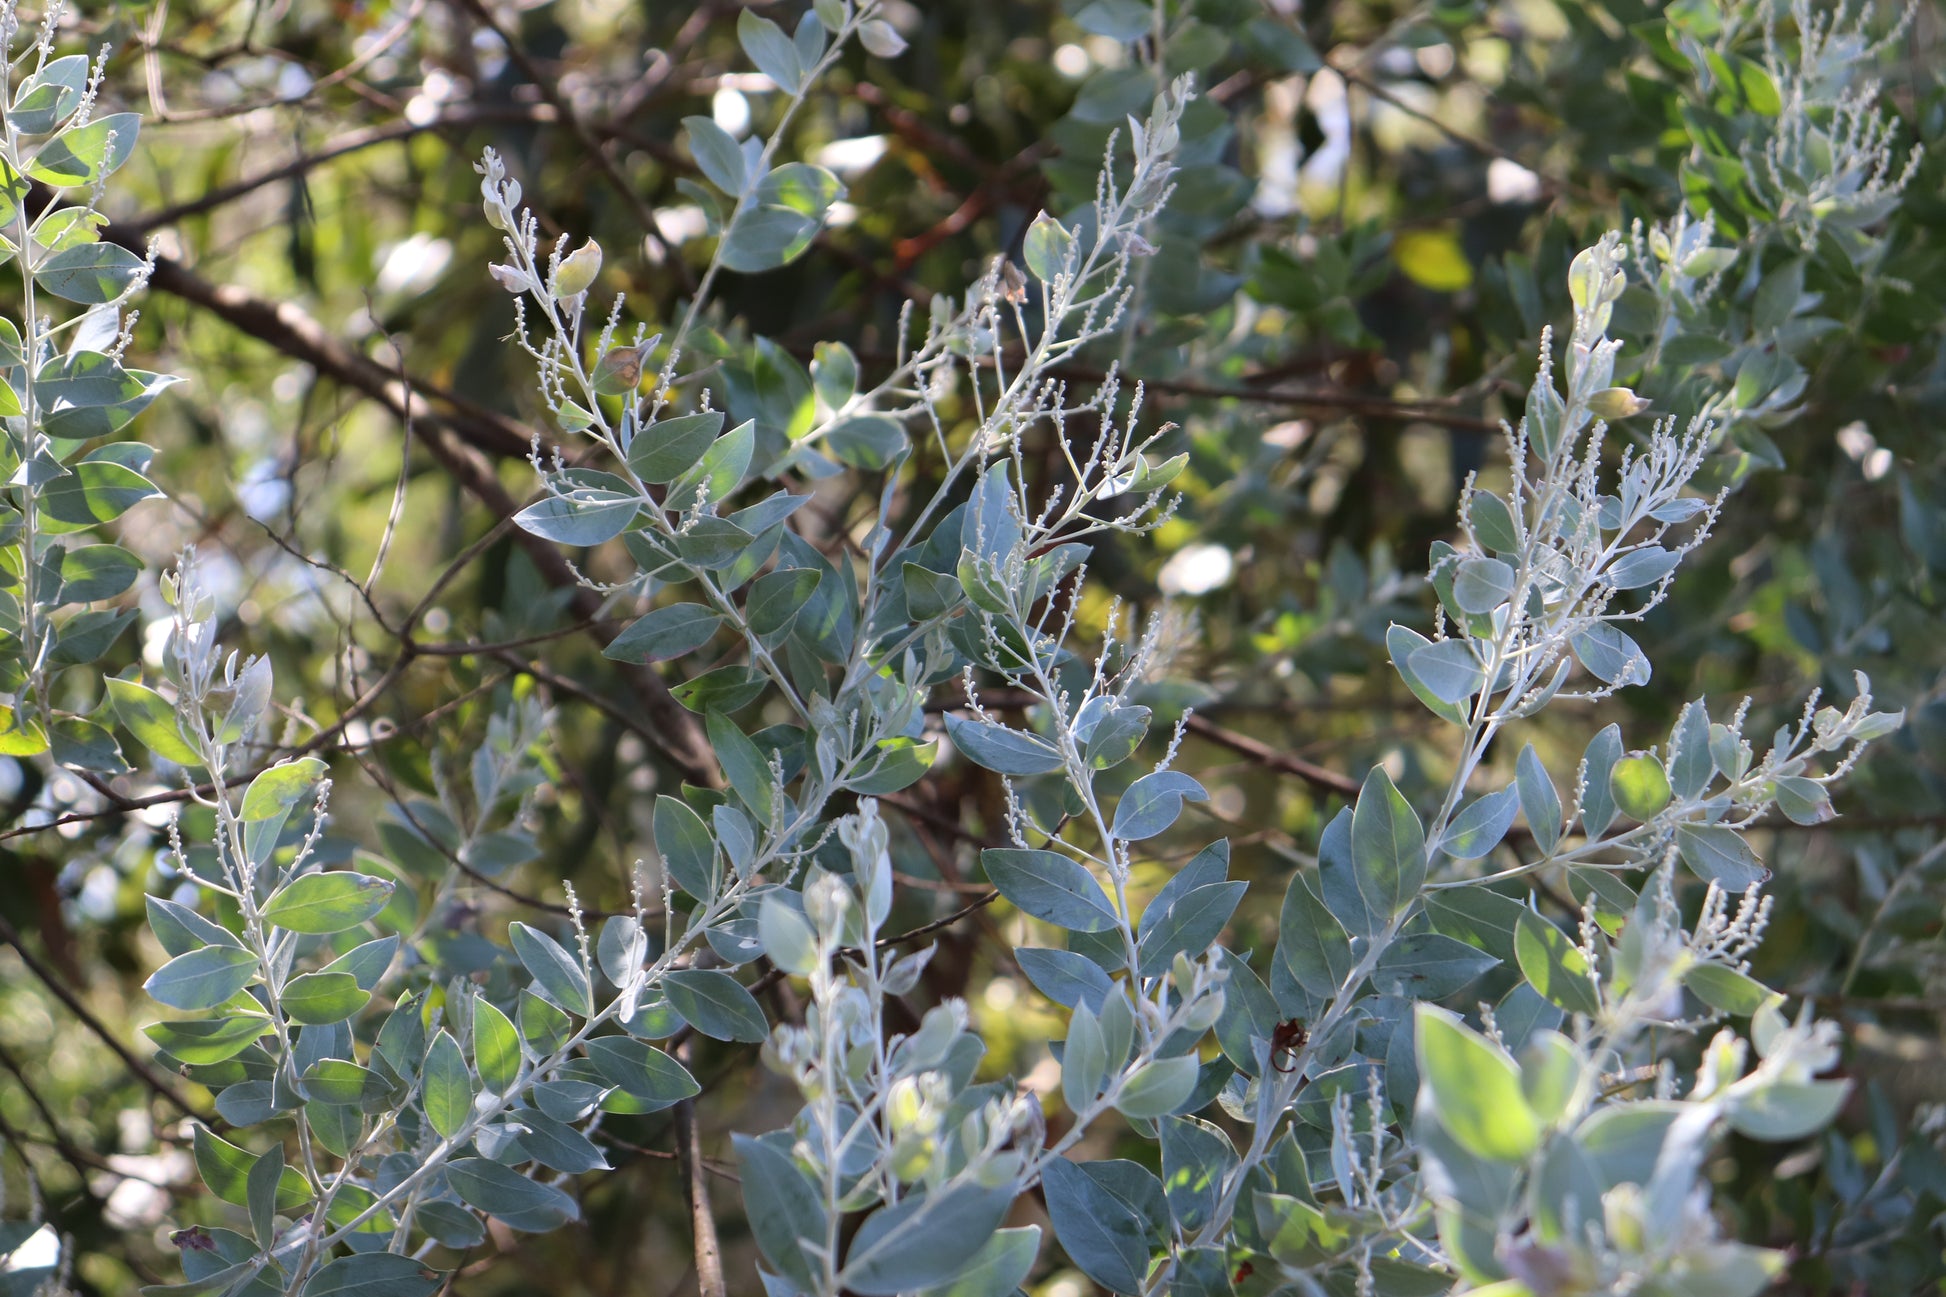 Green/Blue/Silver leaf of the Acacia podalyriifolia "Queensland Silver Wattle'